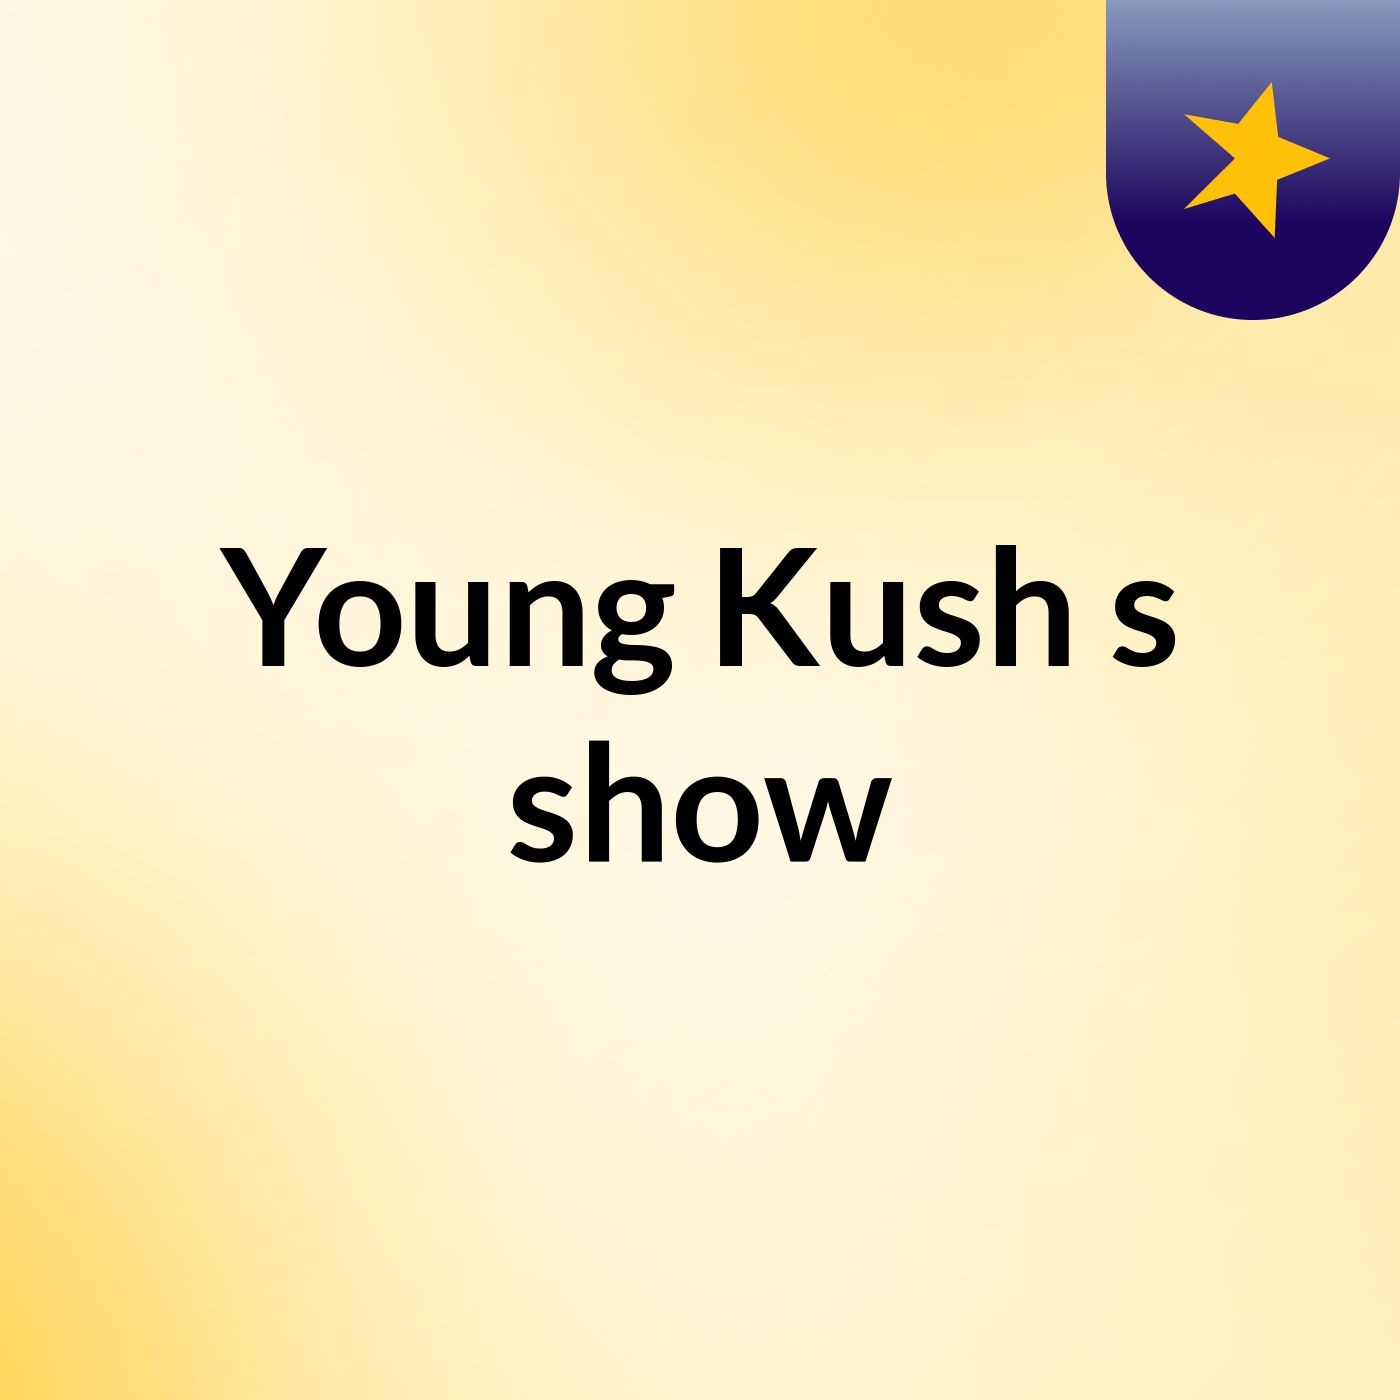 Young Kush's show